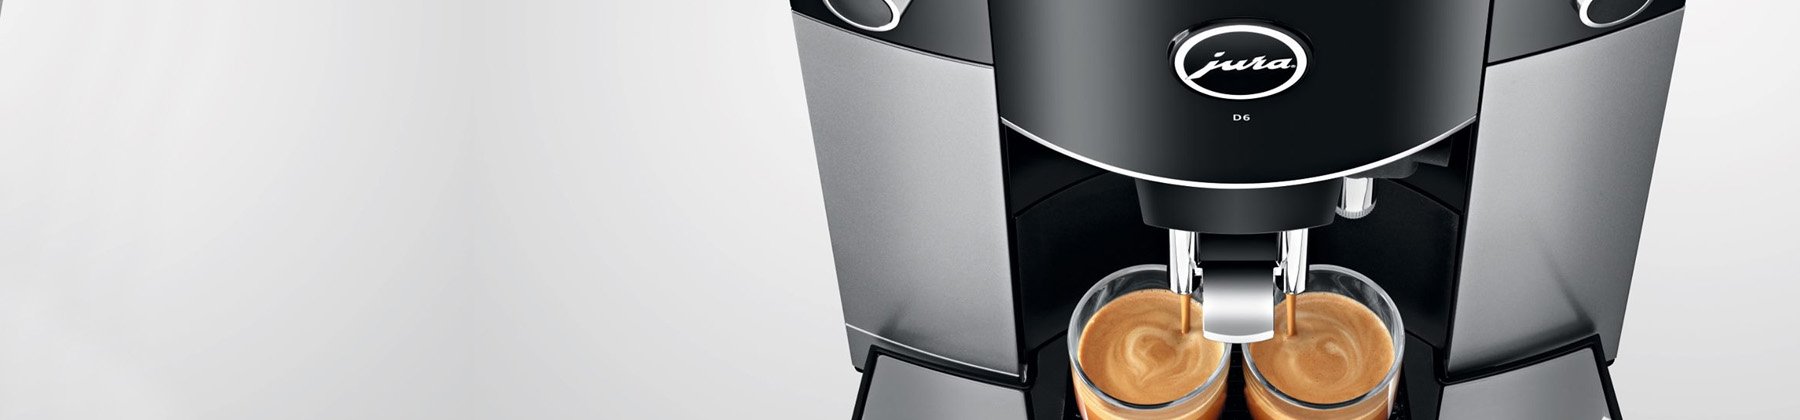 Photo of Jura espresso machines.